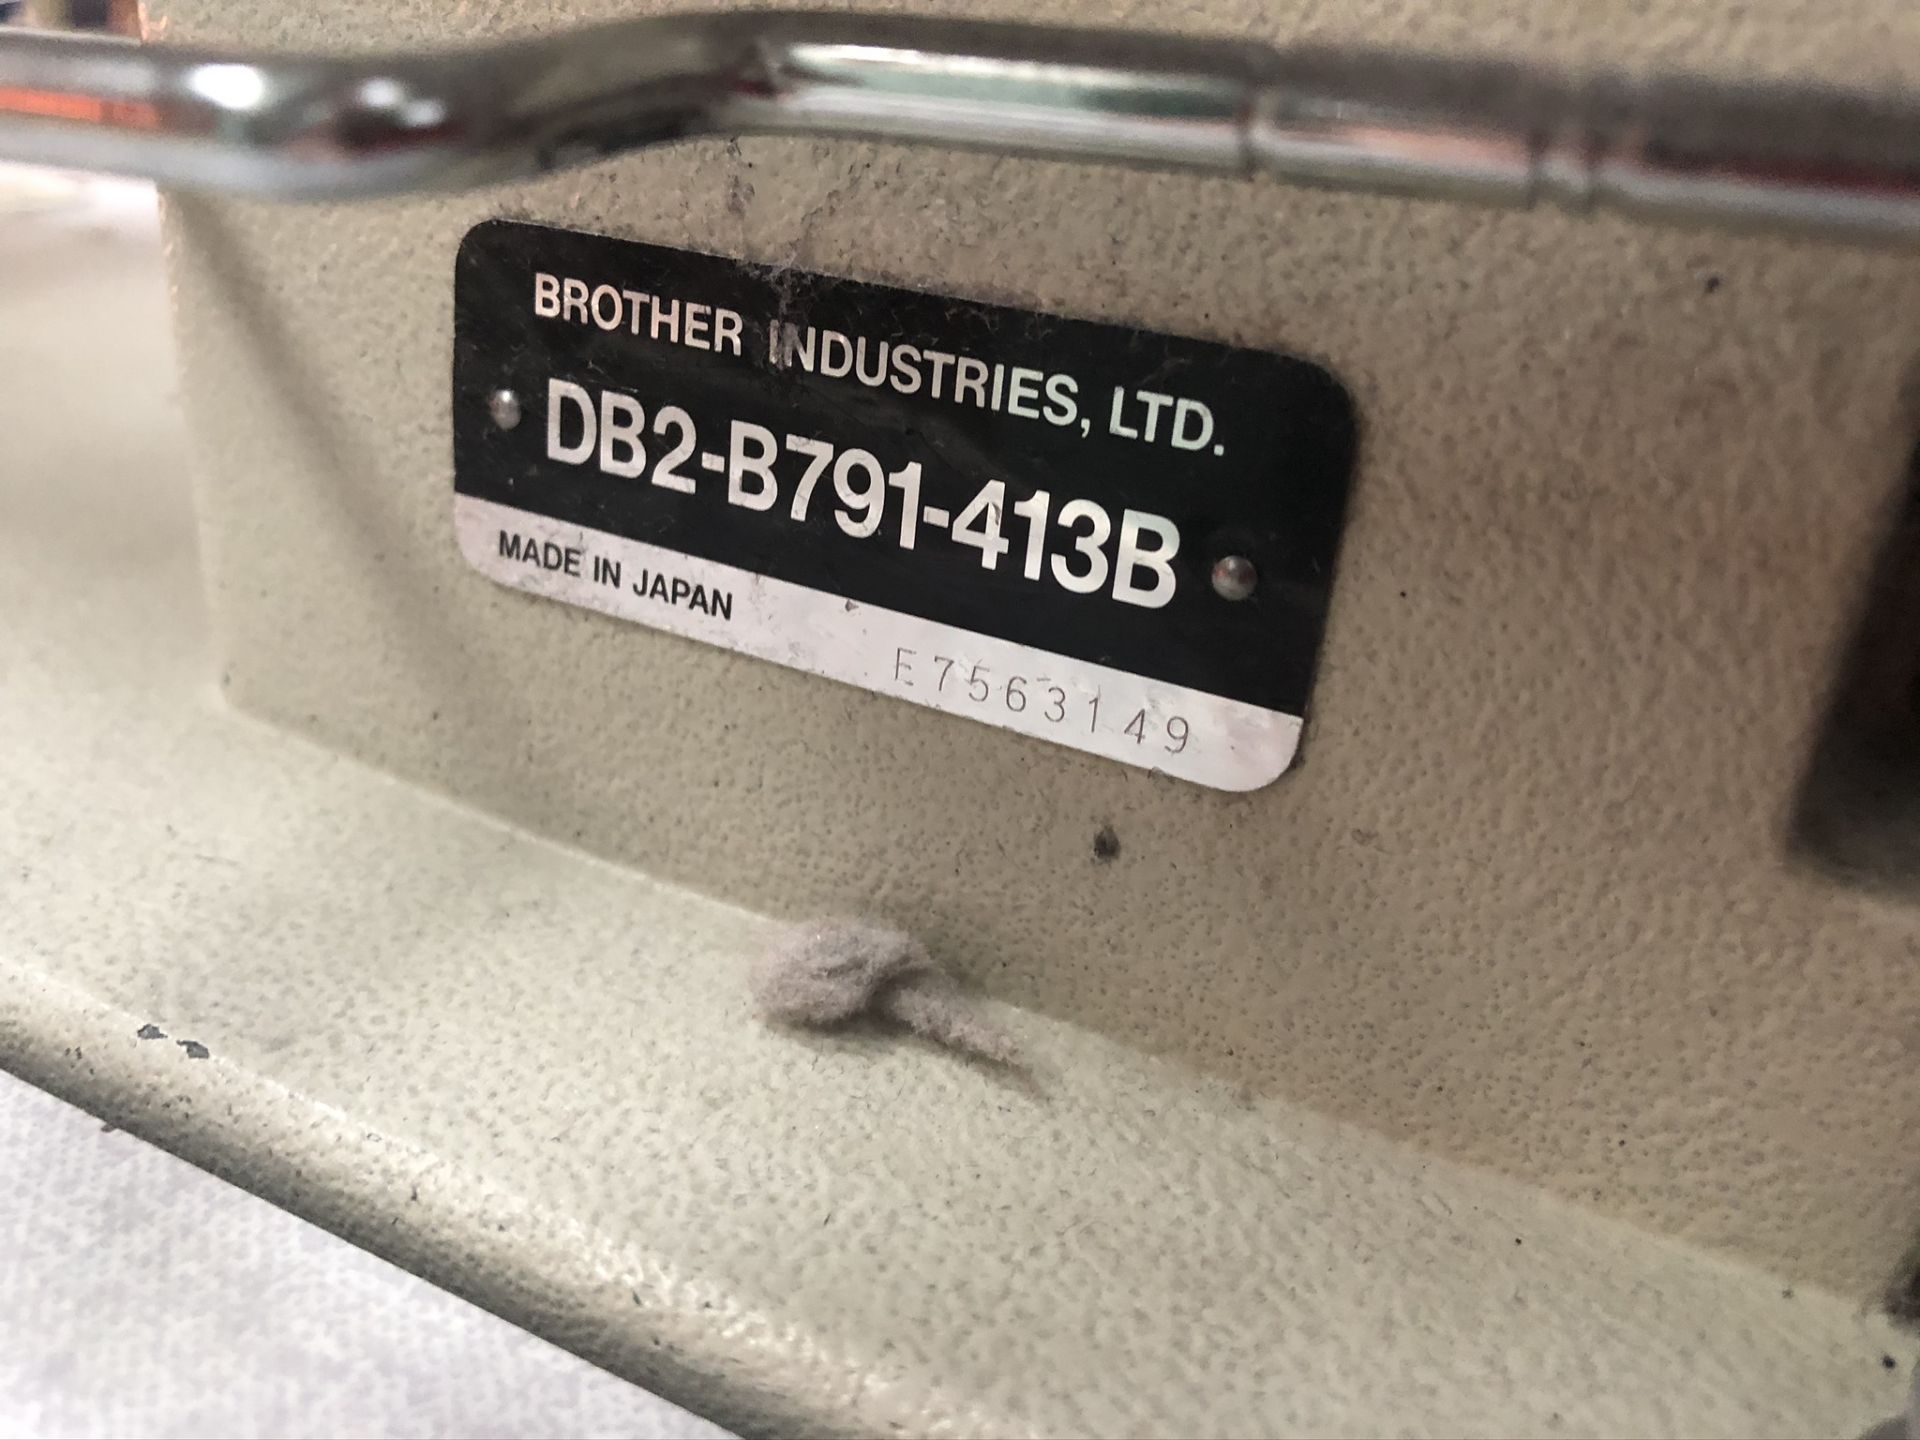 Brother DB2-B791-413B single needle lockstitch sewing machine w/ F40 control panel - Image 7 of 8